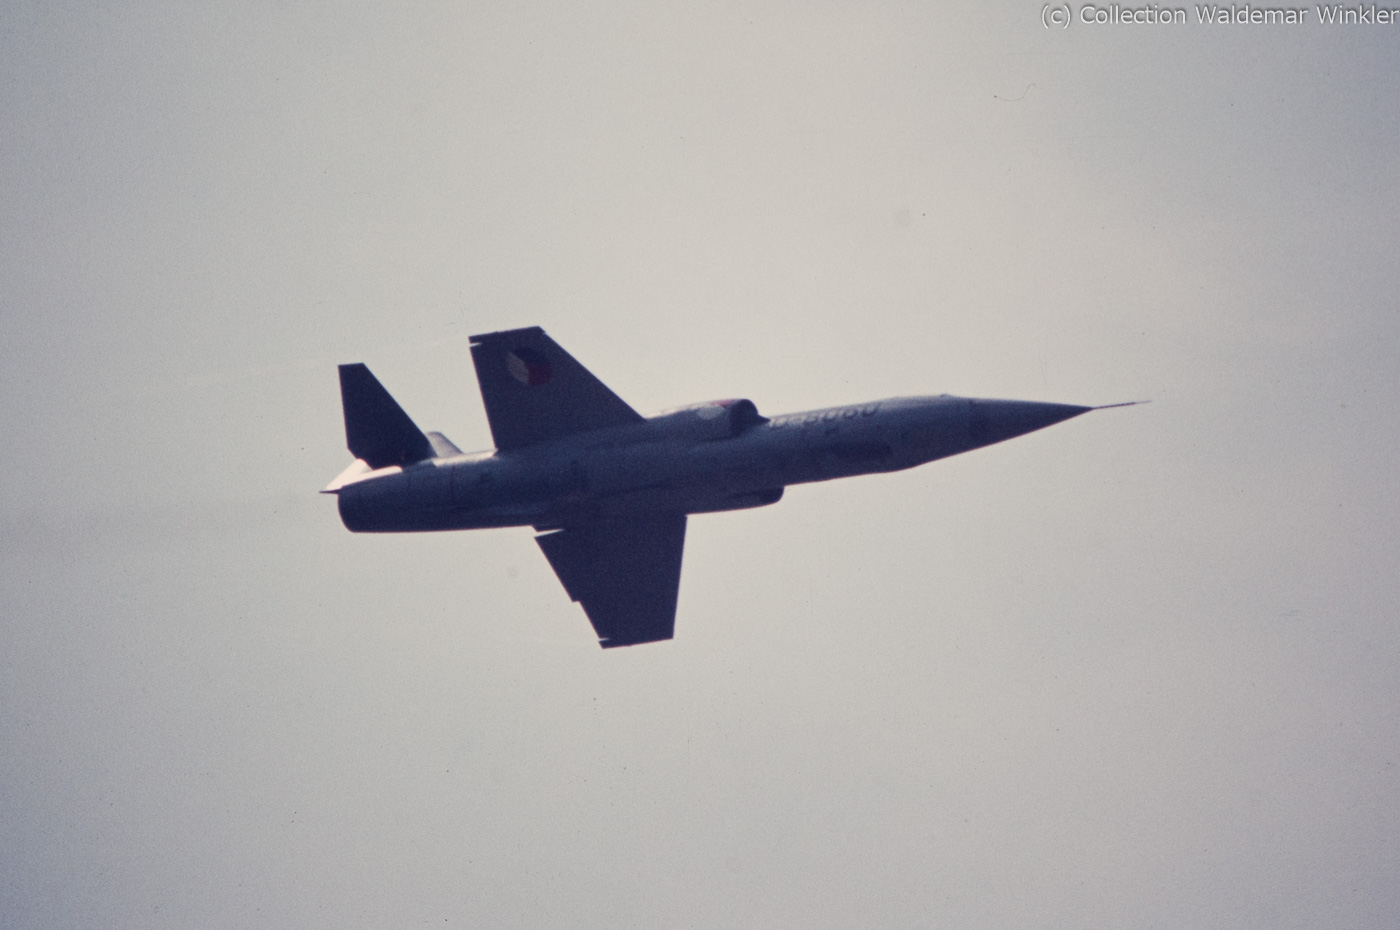 F-104_Starfighter_DSC_4944.jpg